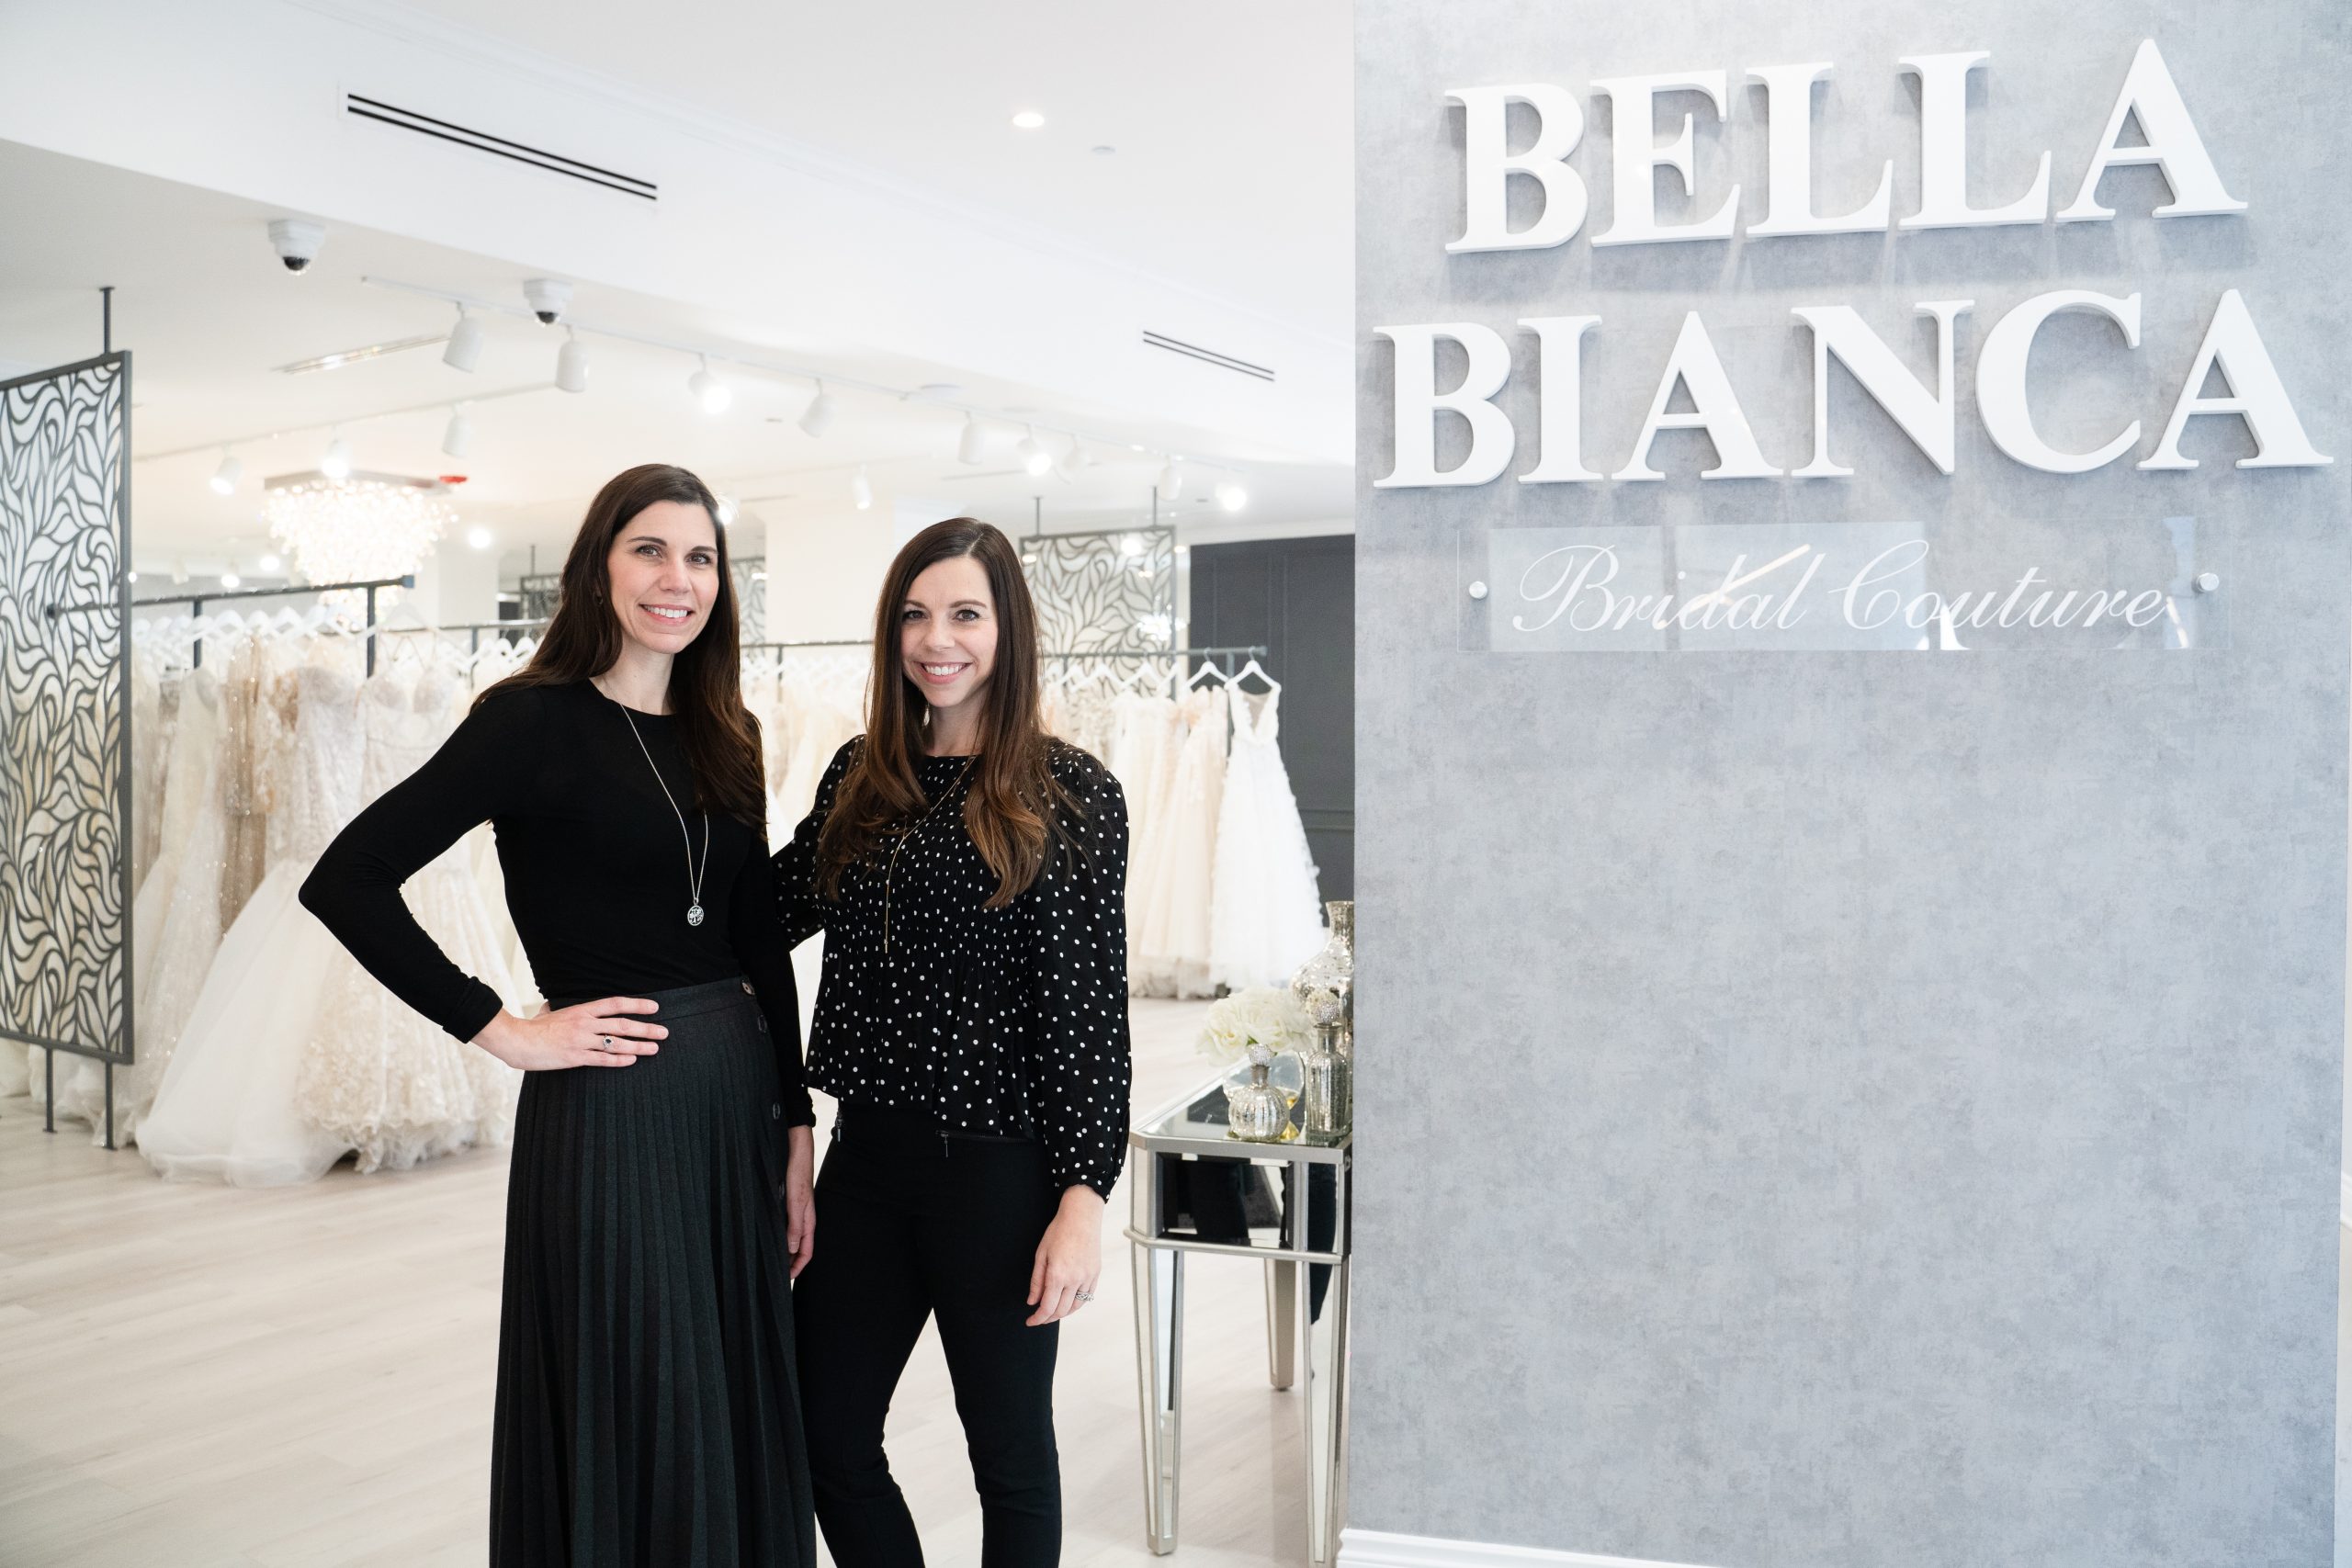 Chicago's New Bella Bianca Bridal Salon ...